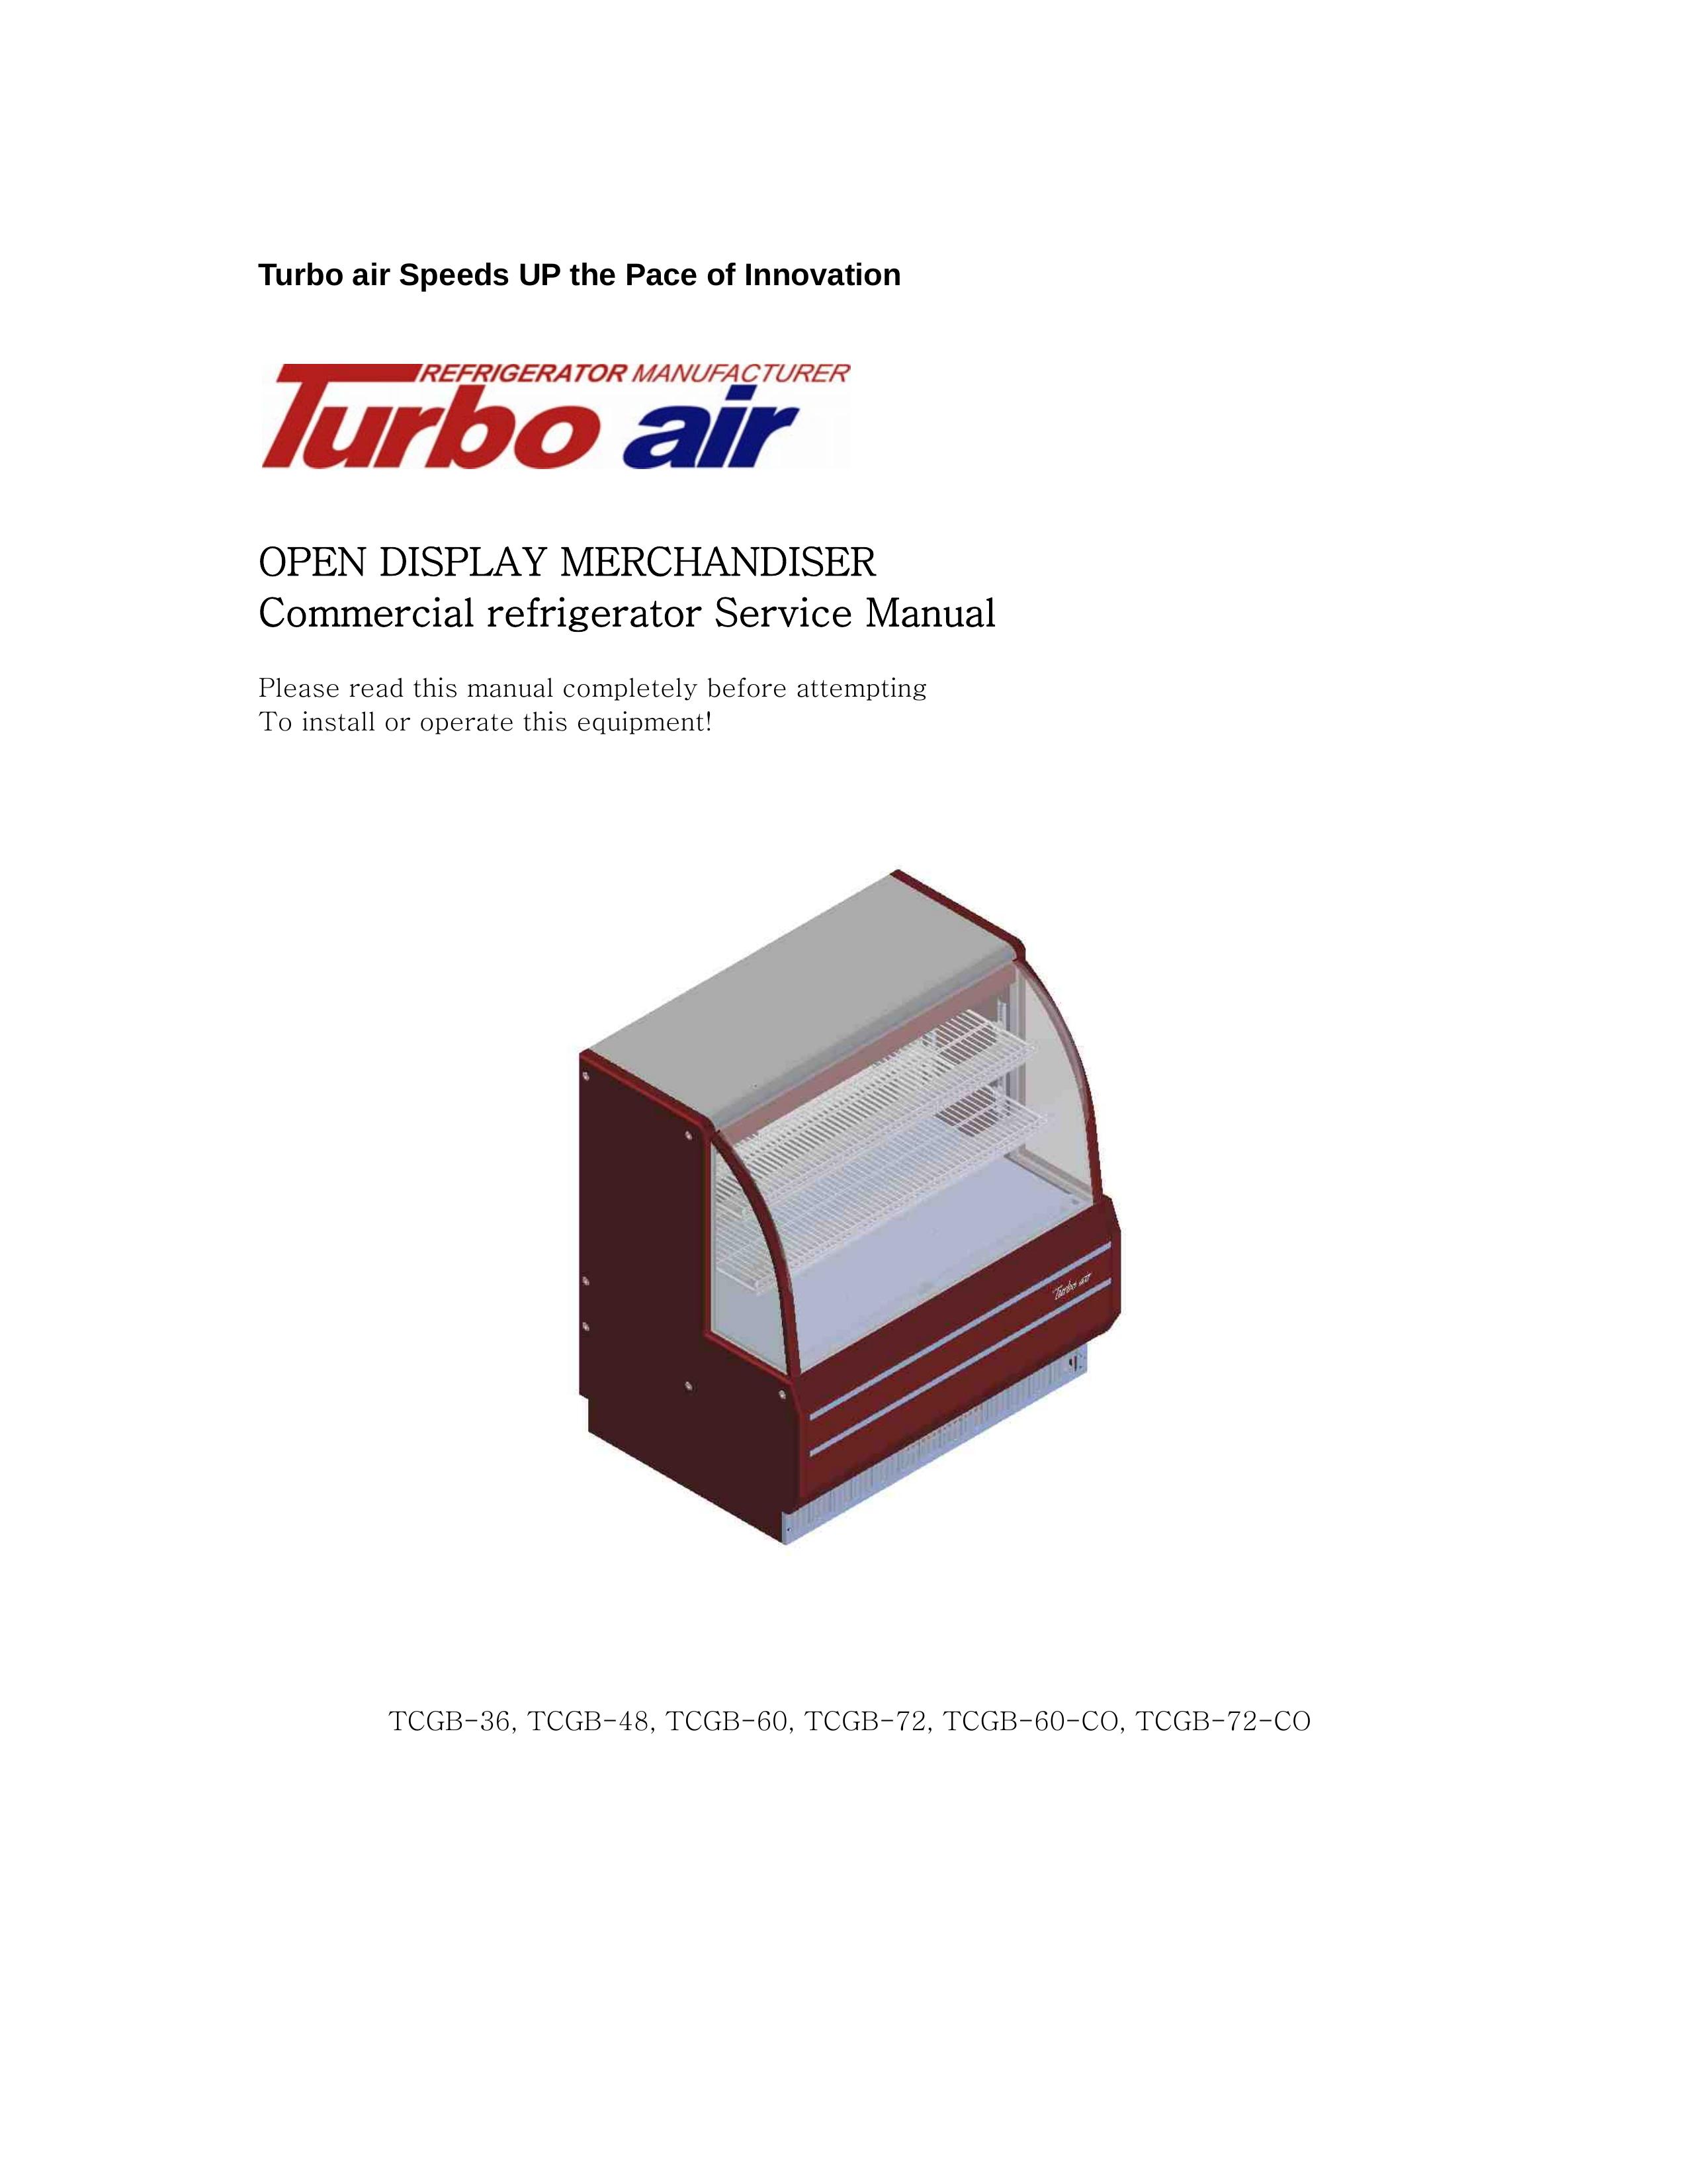 Turbo Air TCGB-60 Refrigerator User Manual